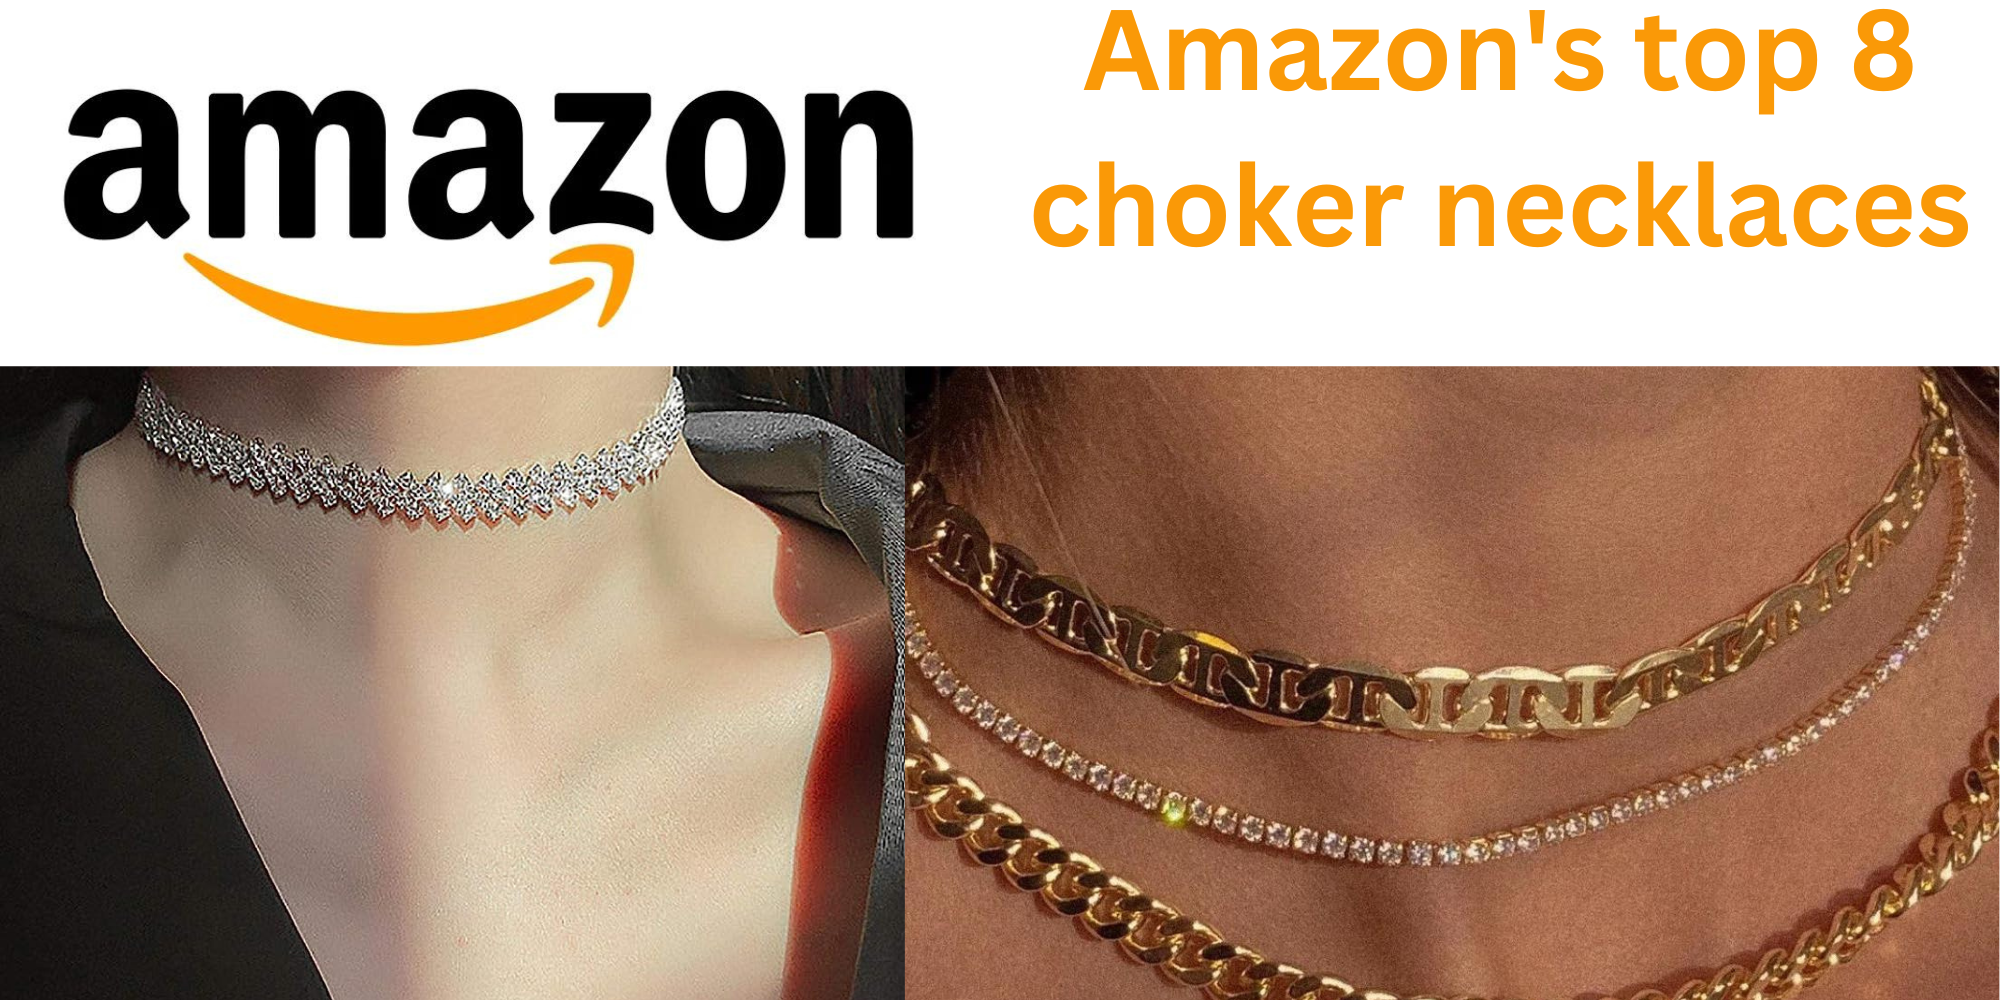 Amazon's top 8 choker necklaces